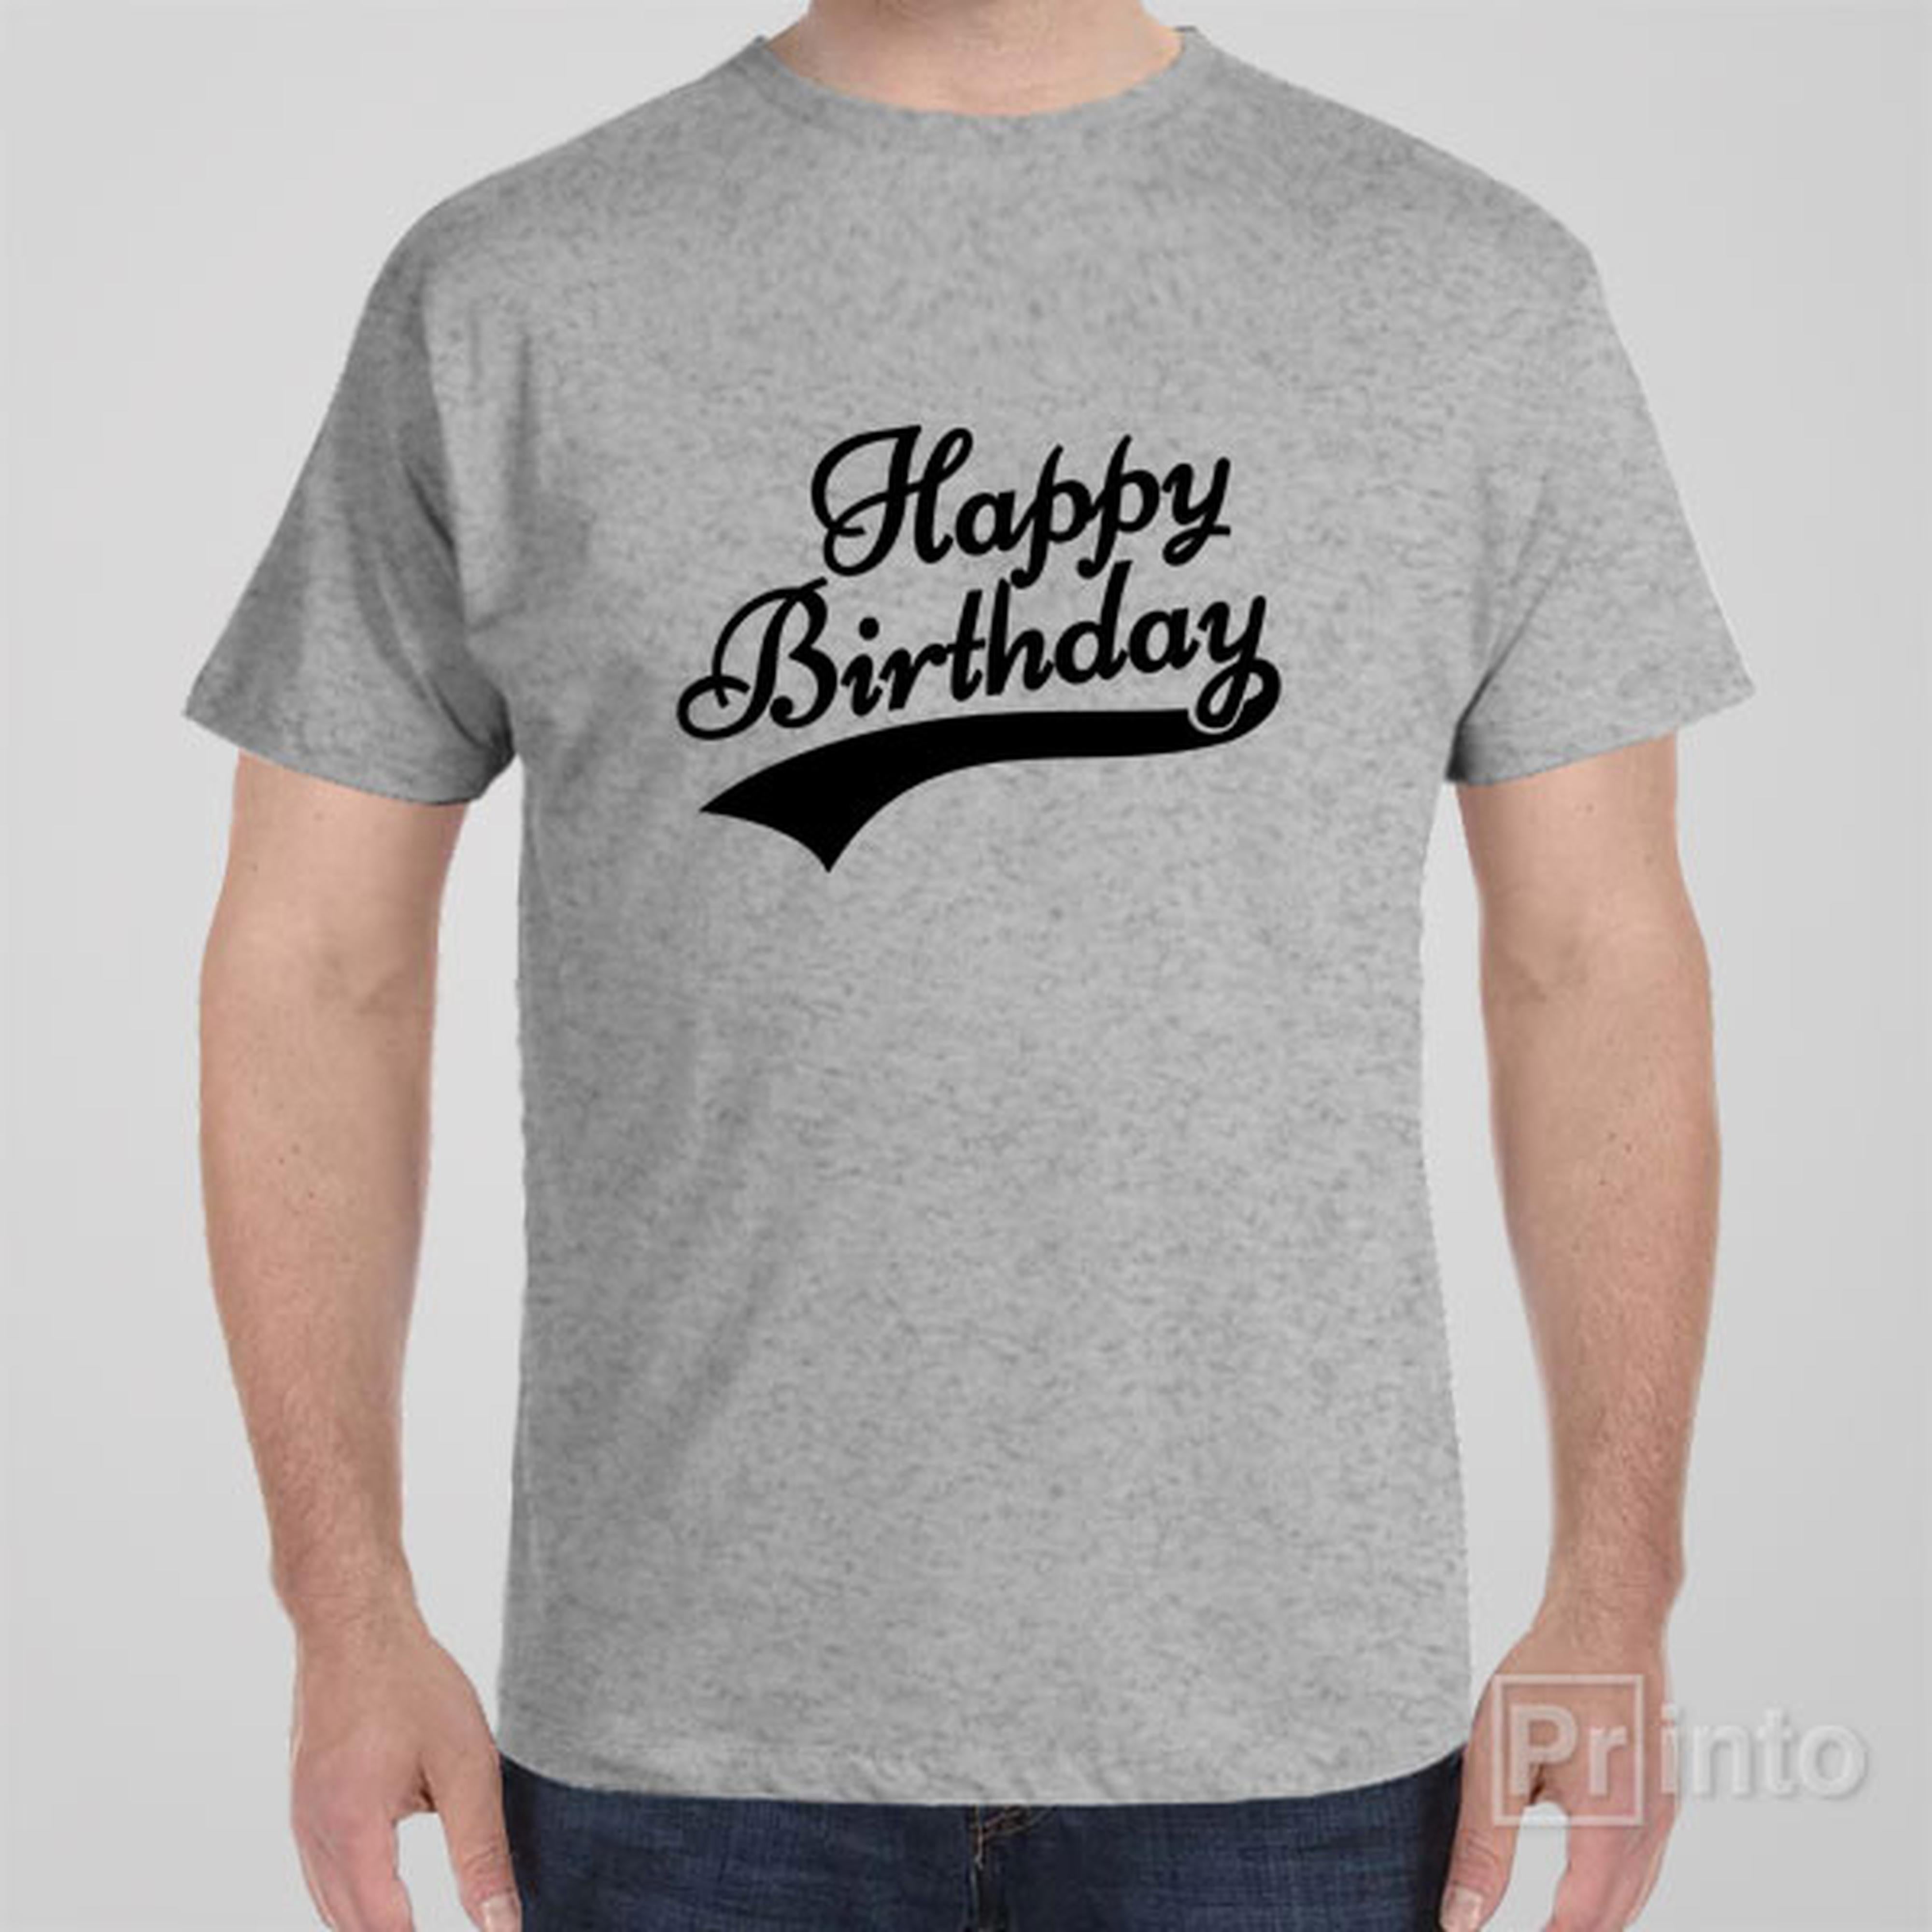 happy-birthday-t-shirt